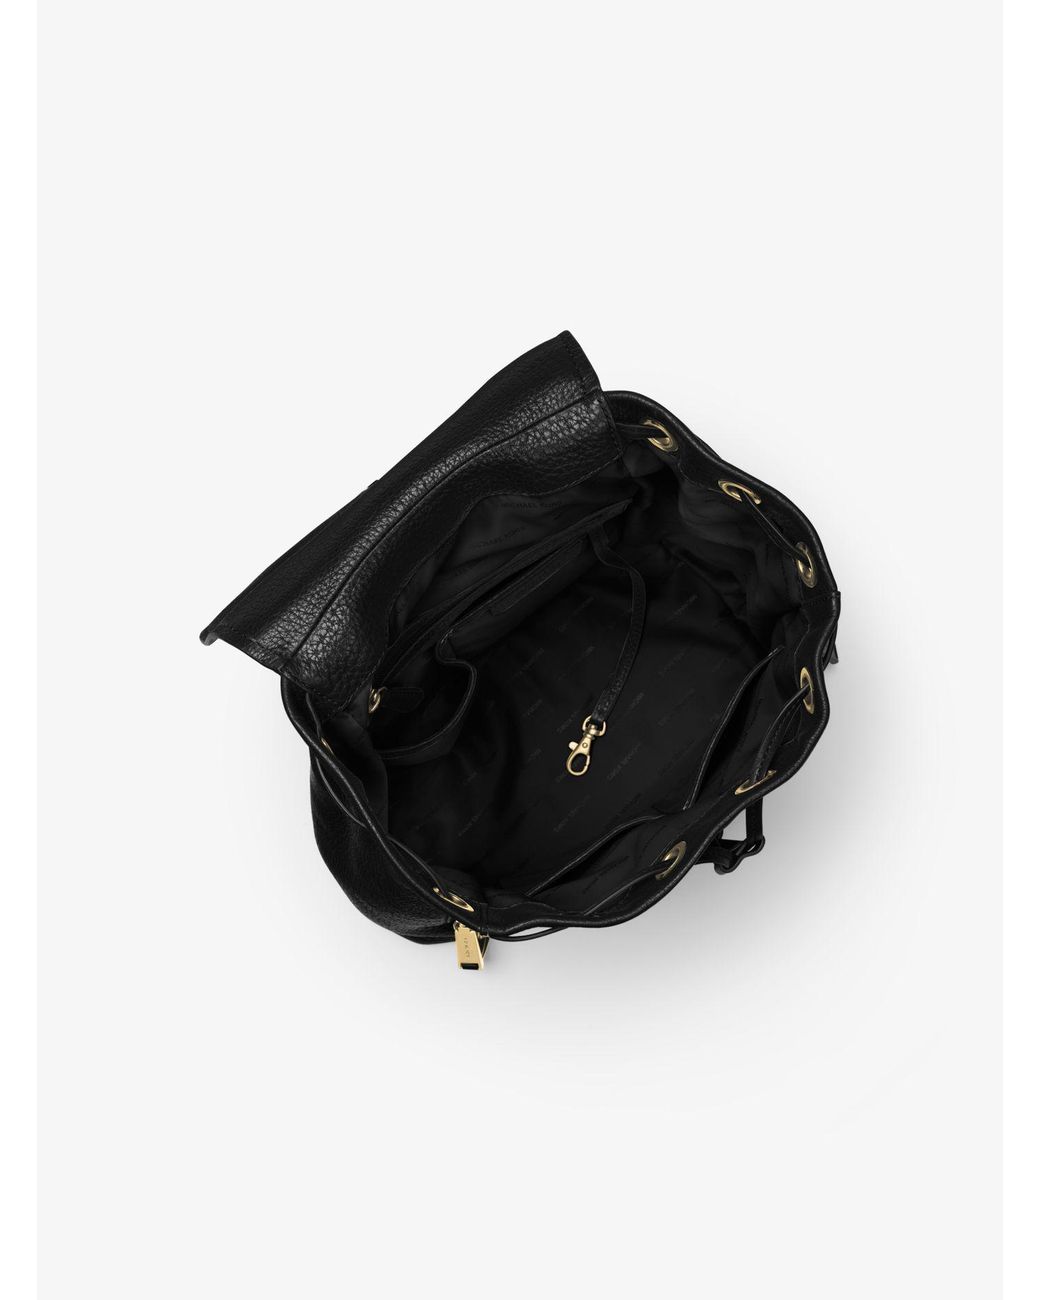 Michael Kors Viv Large Leather Backpack in Black | Lyst